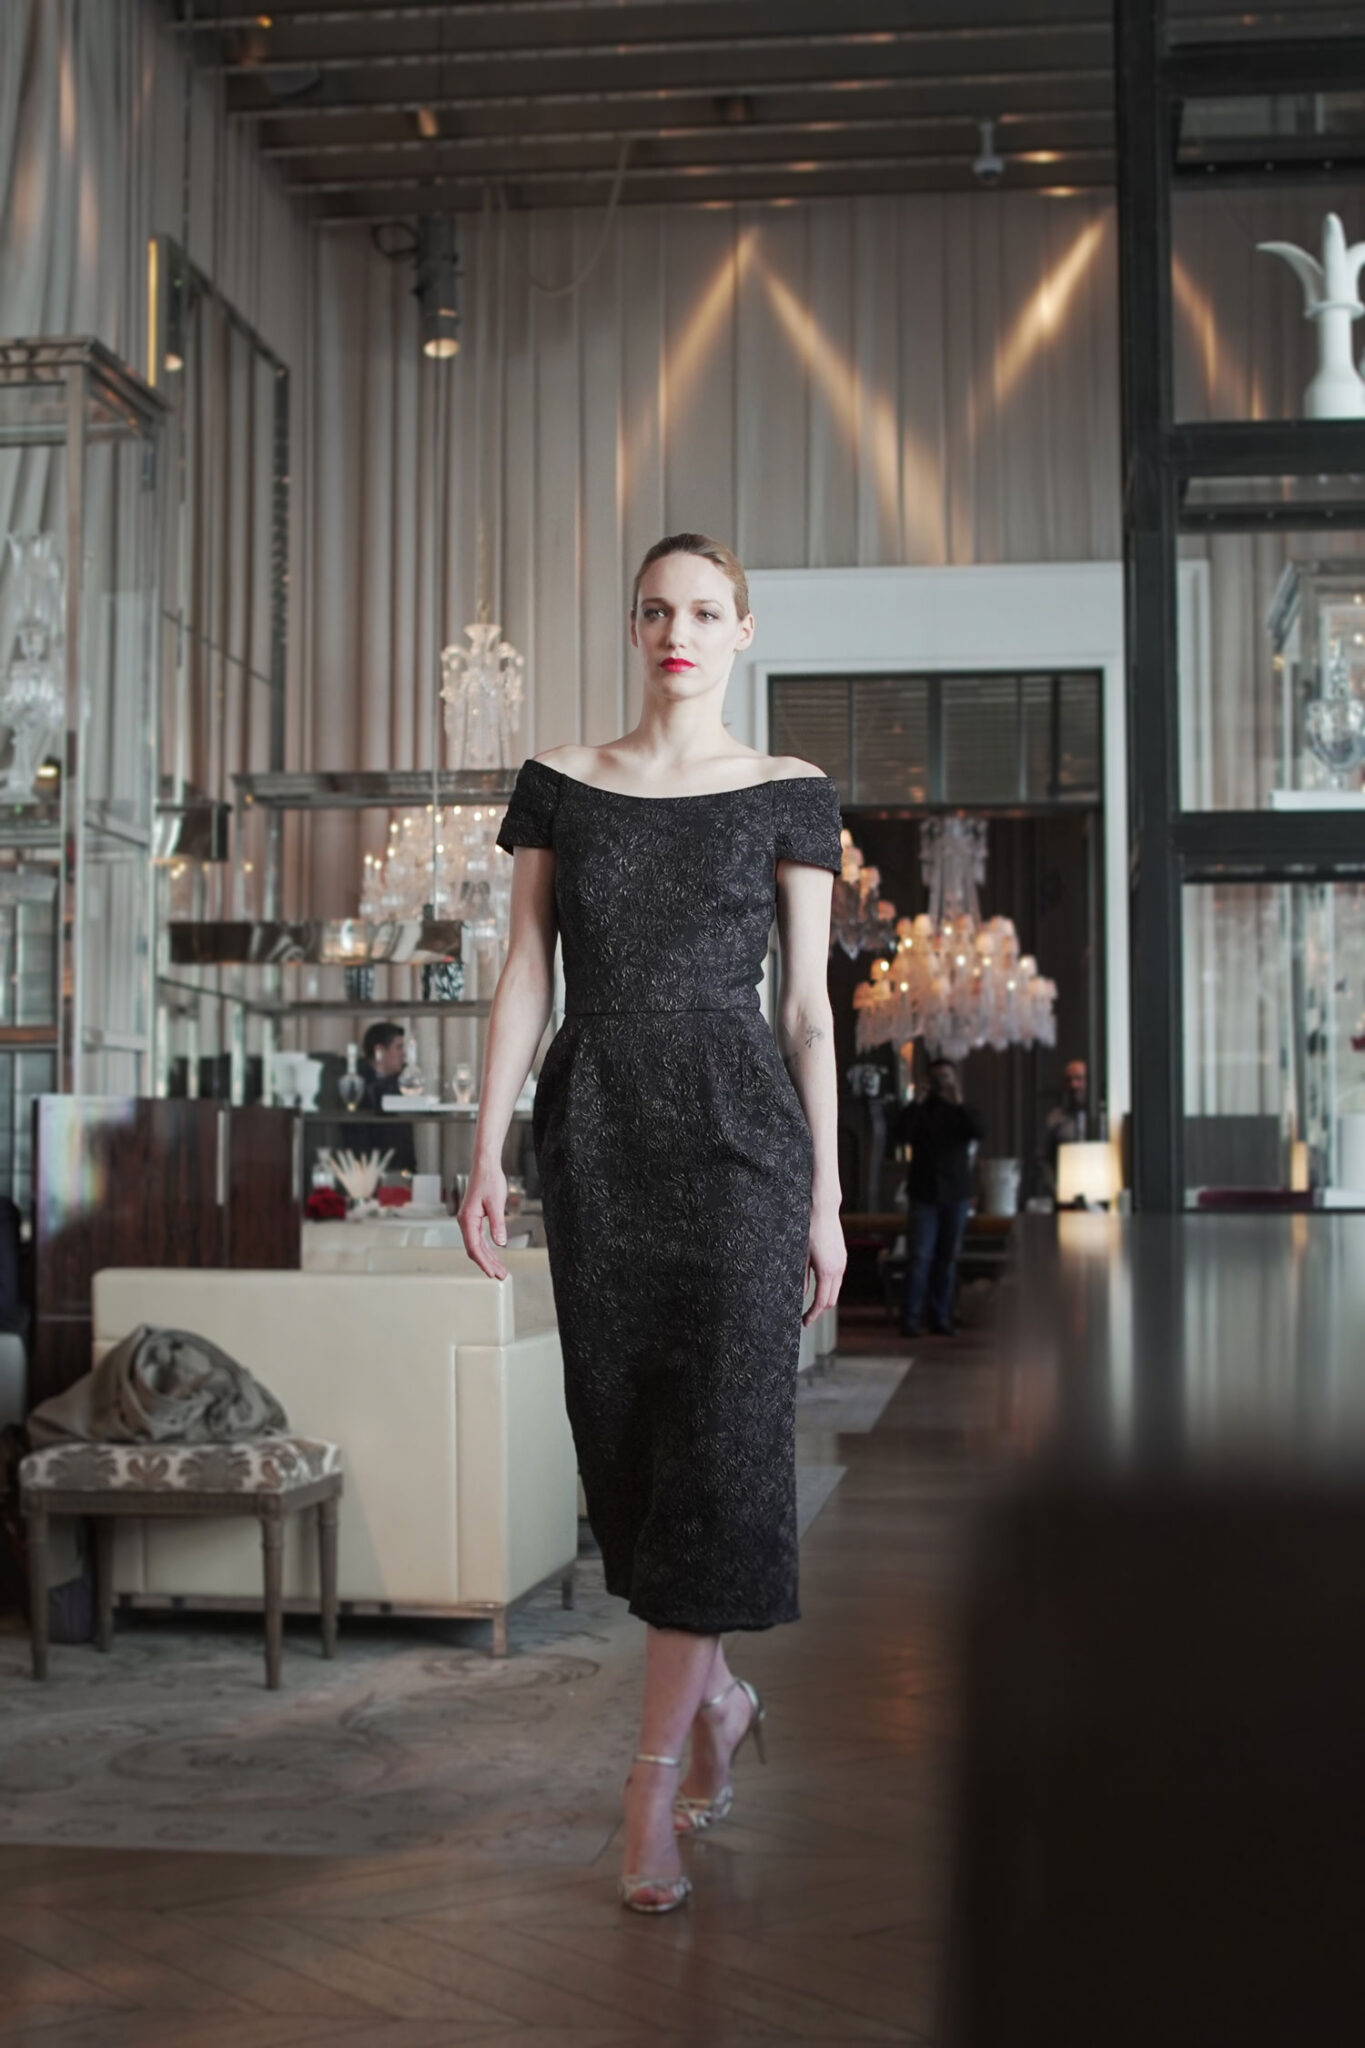 Fairytale collection - Look 4 - Elegant dress in black - Verdin New York